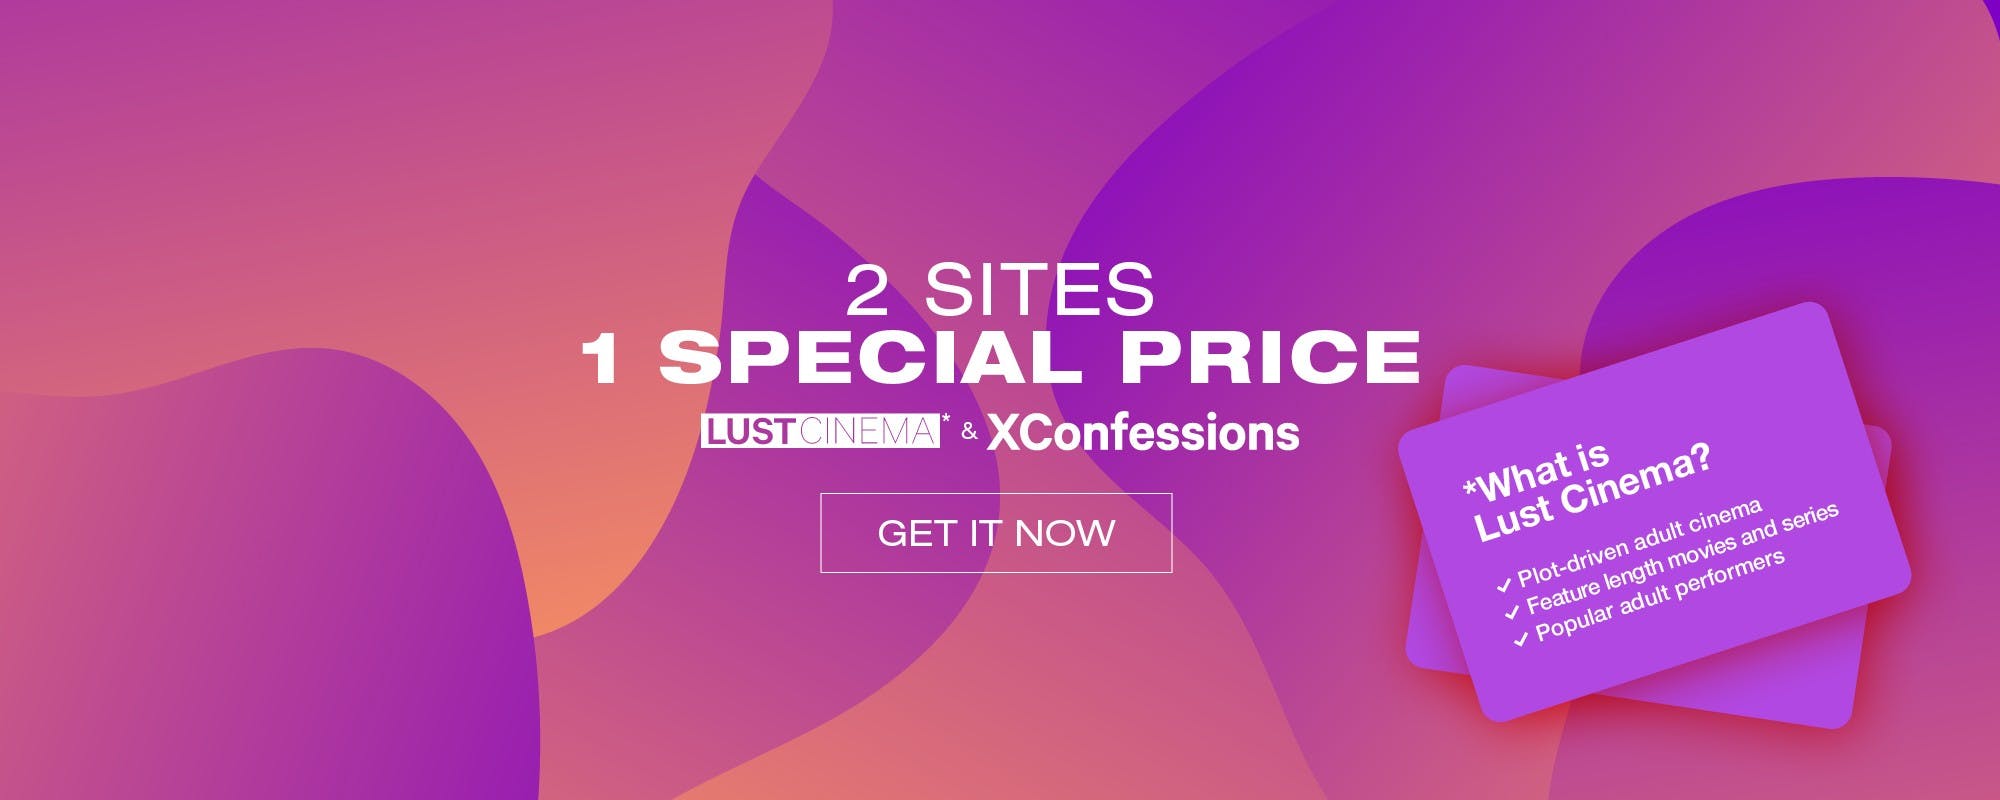 XC - cross selling